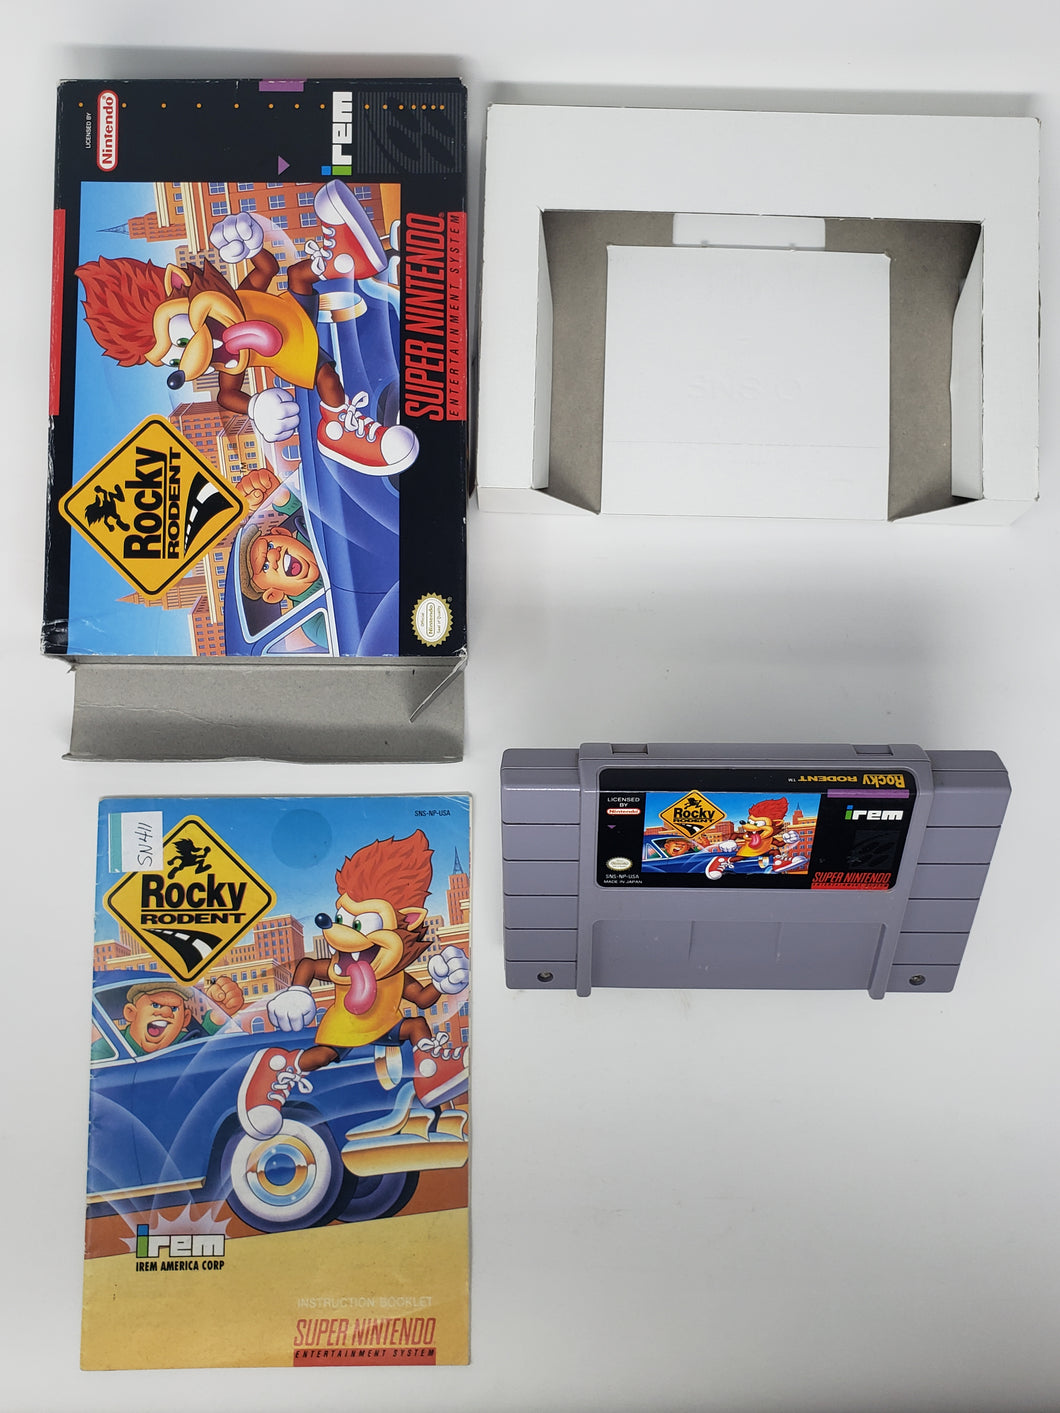 Rocky Rodent - Super Nintendo | SNES